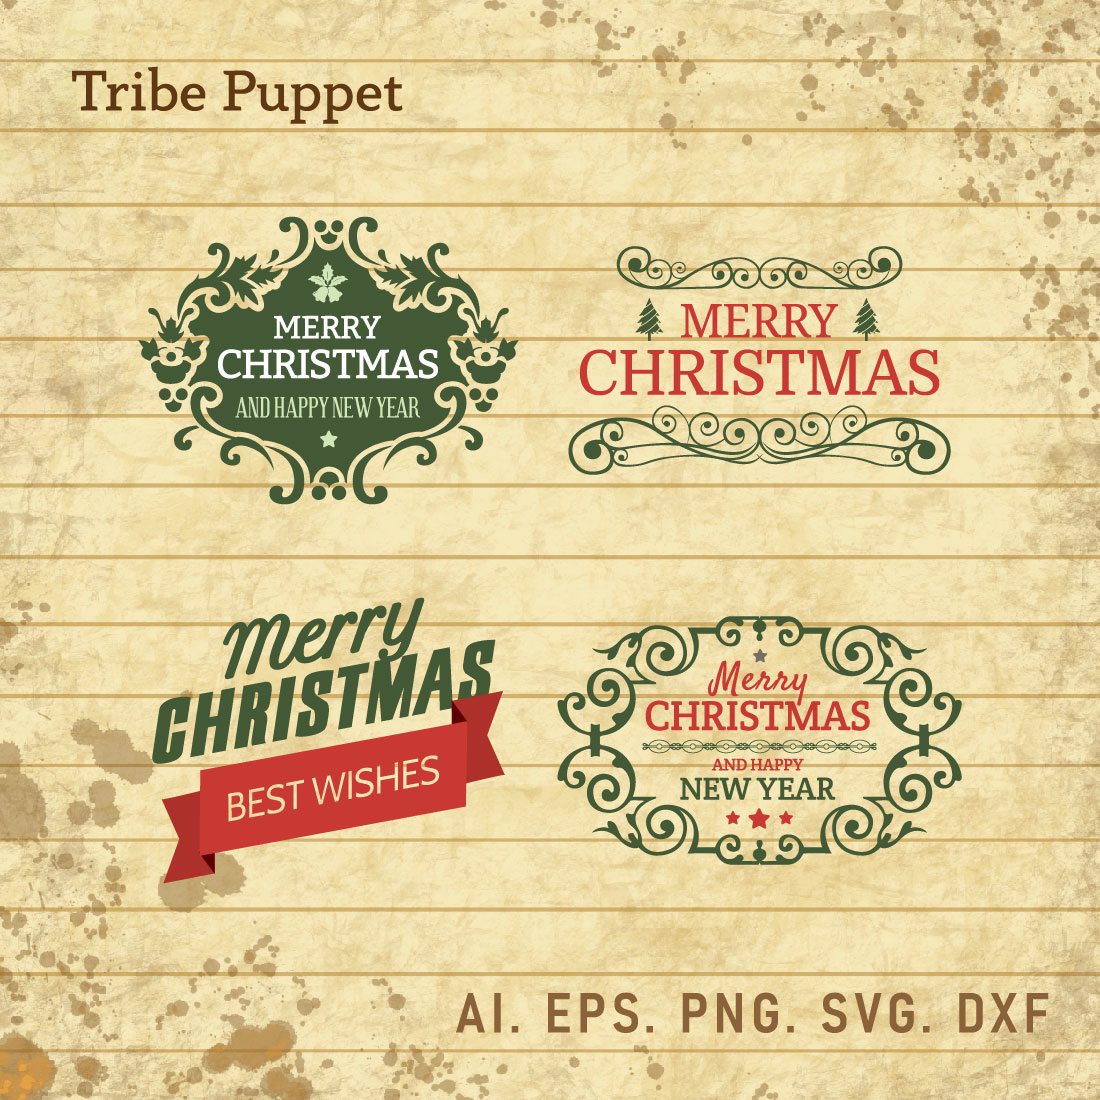 Christmas Typography Bundle cover image.